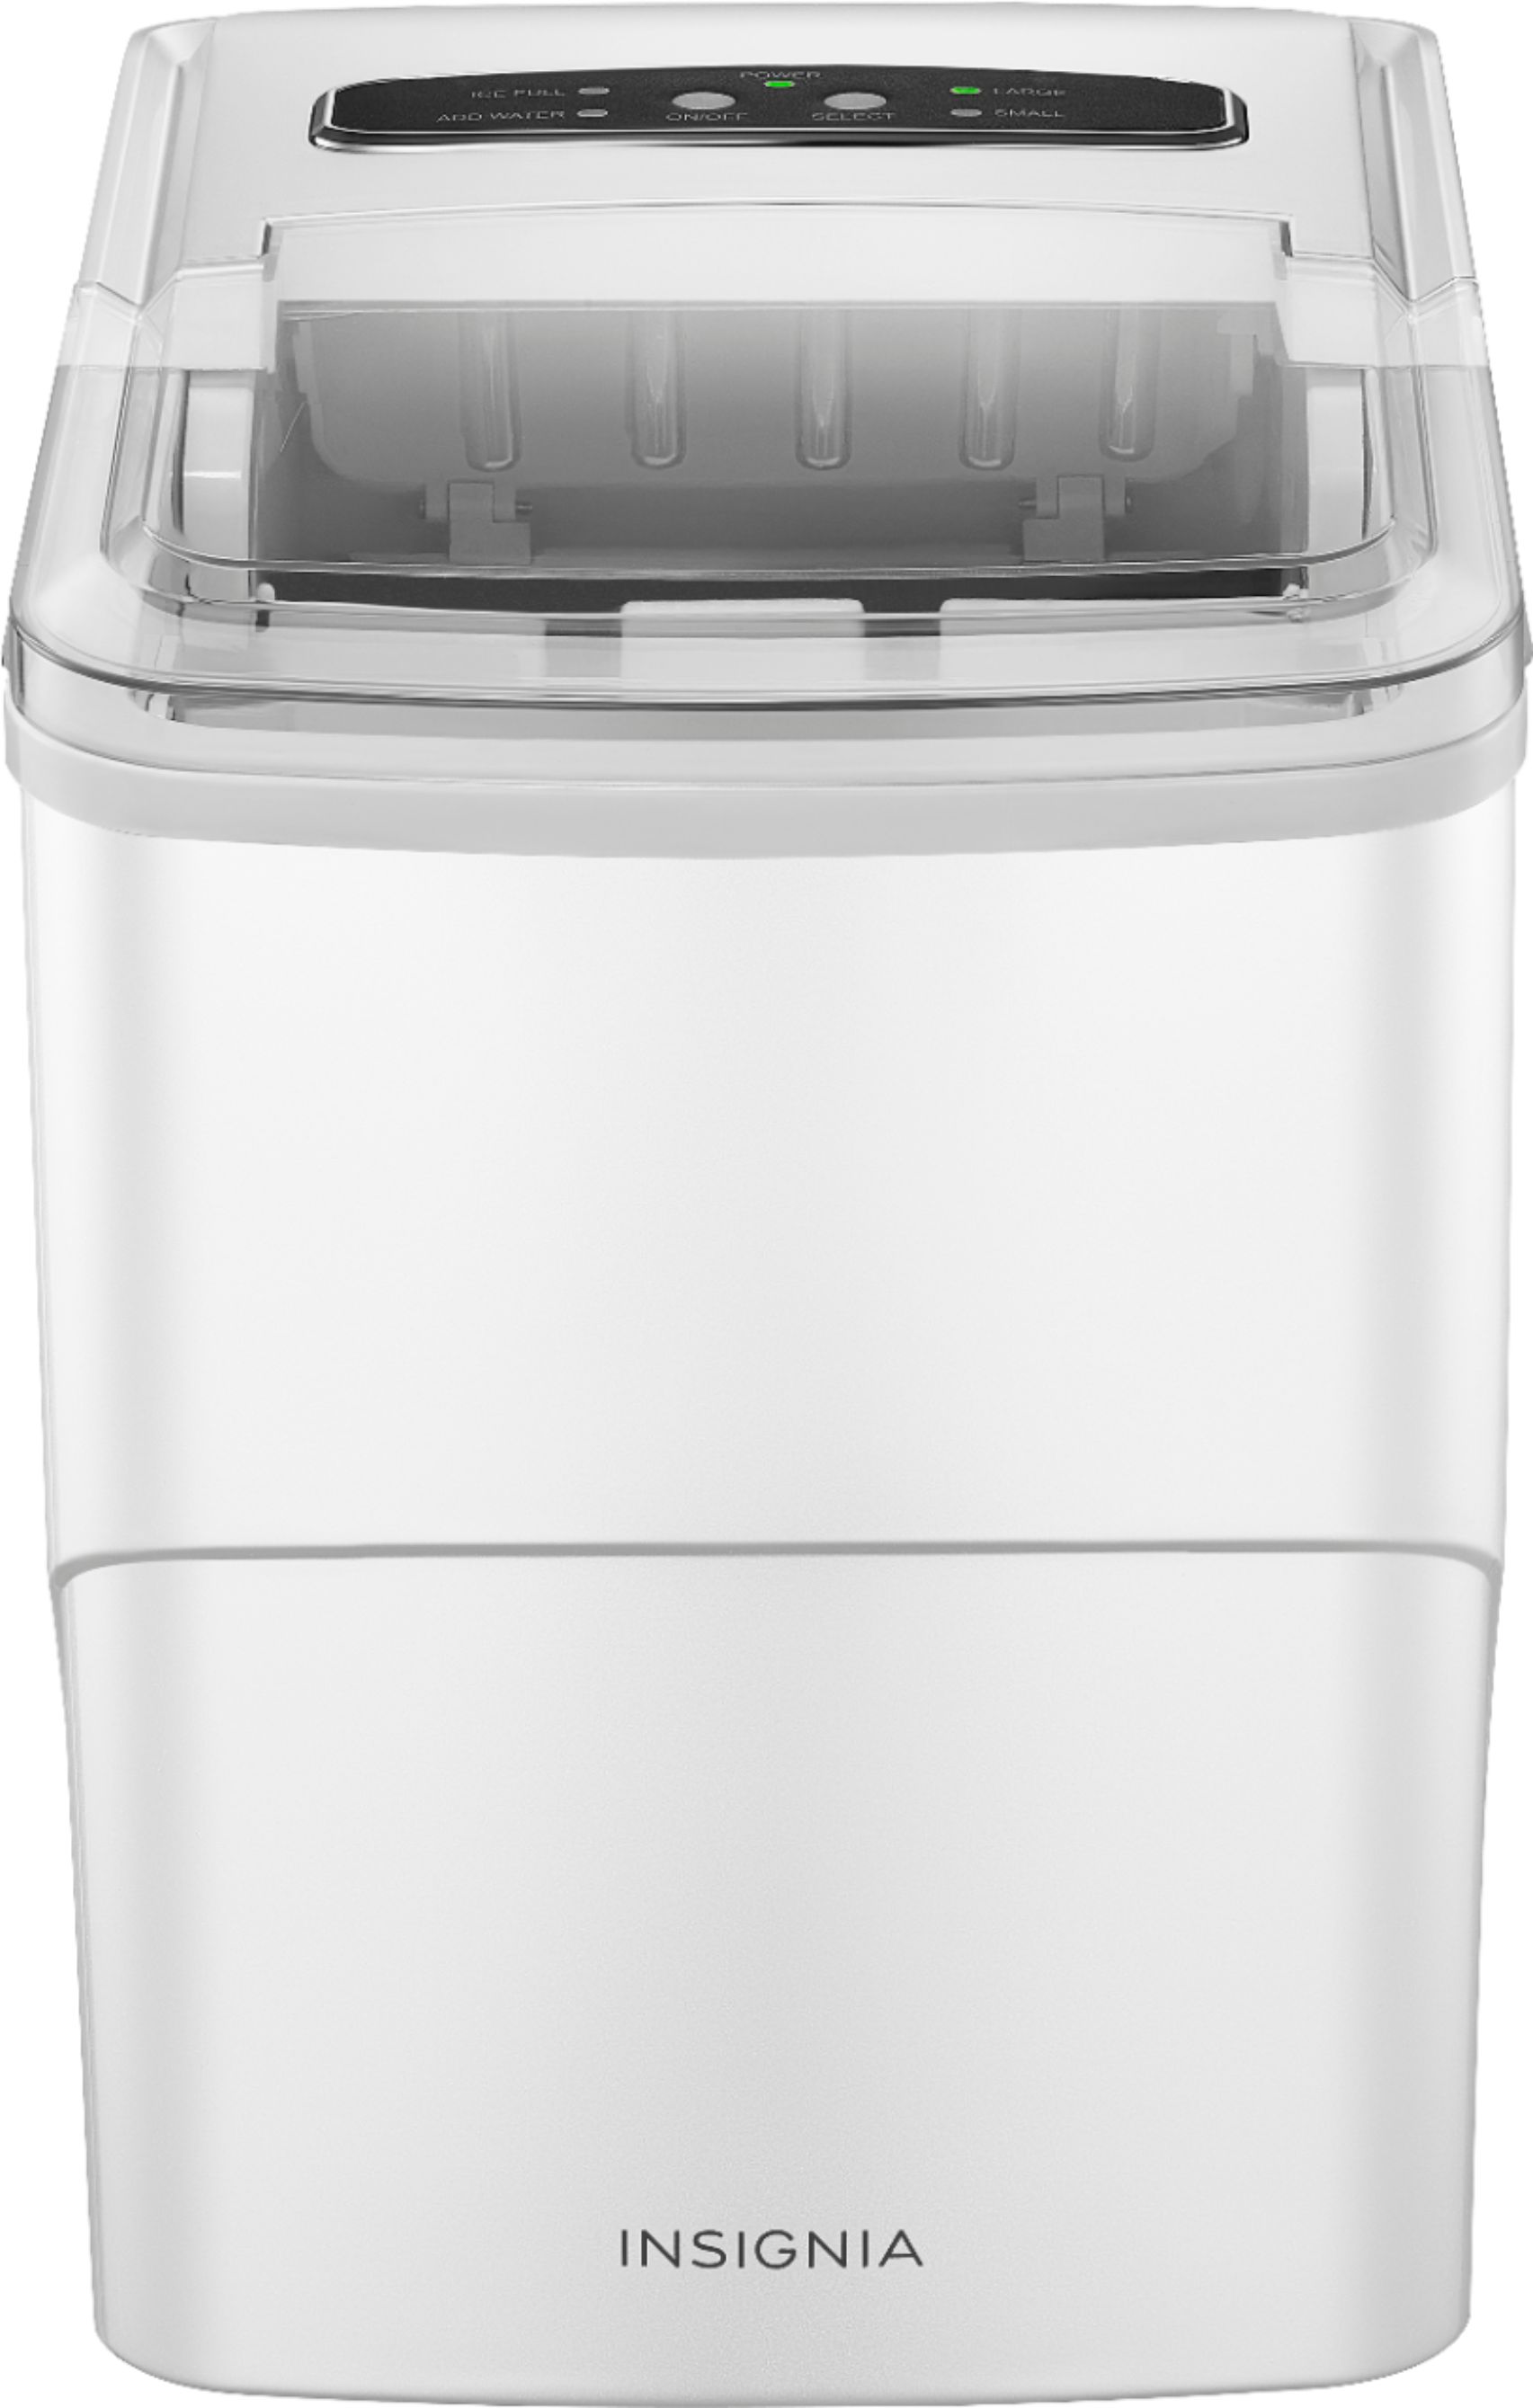 NEW) Insignia Refrigerator Icemaker Kit NS-IMK20WH7 White 600603204111